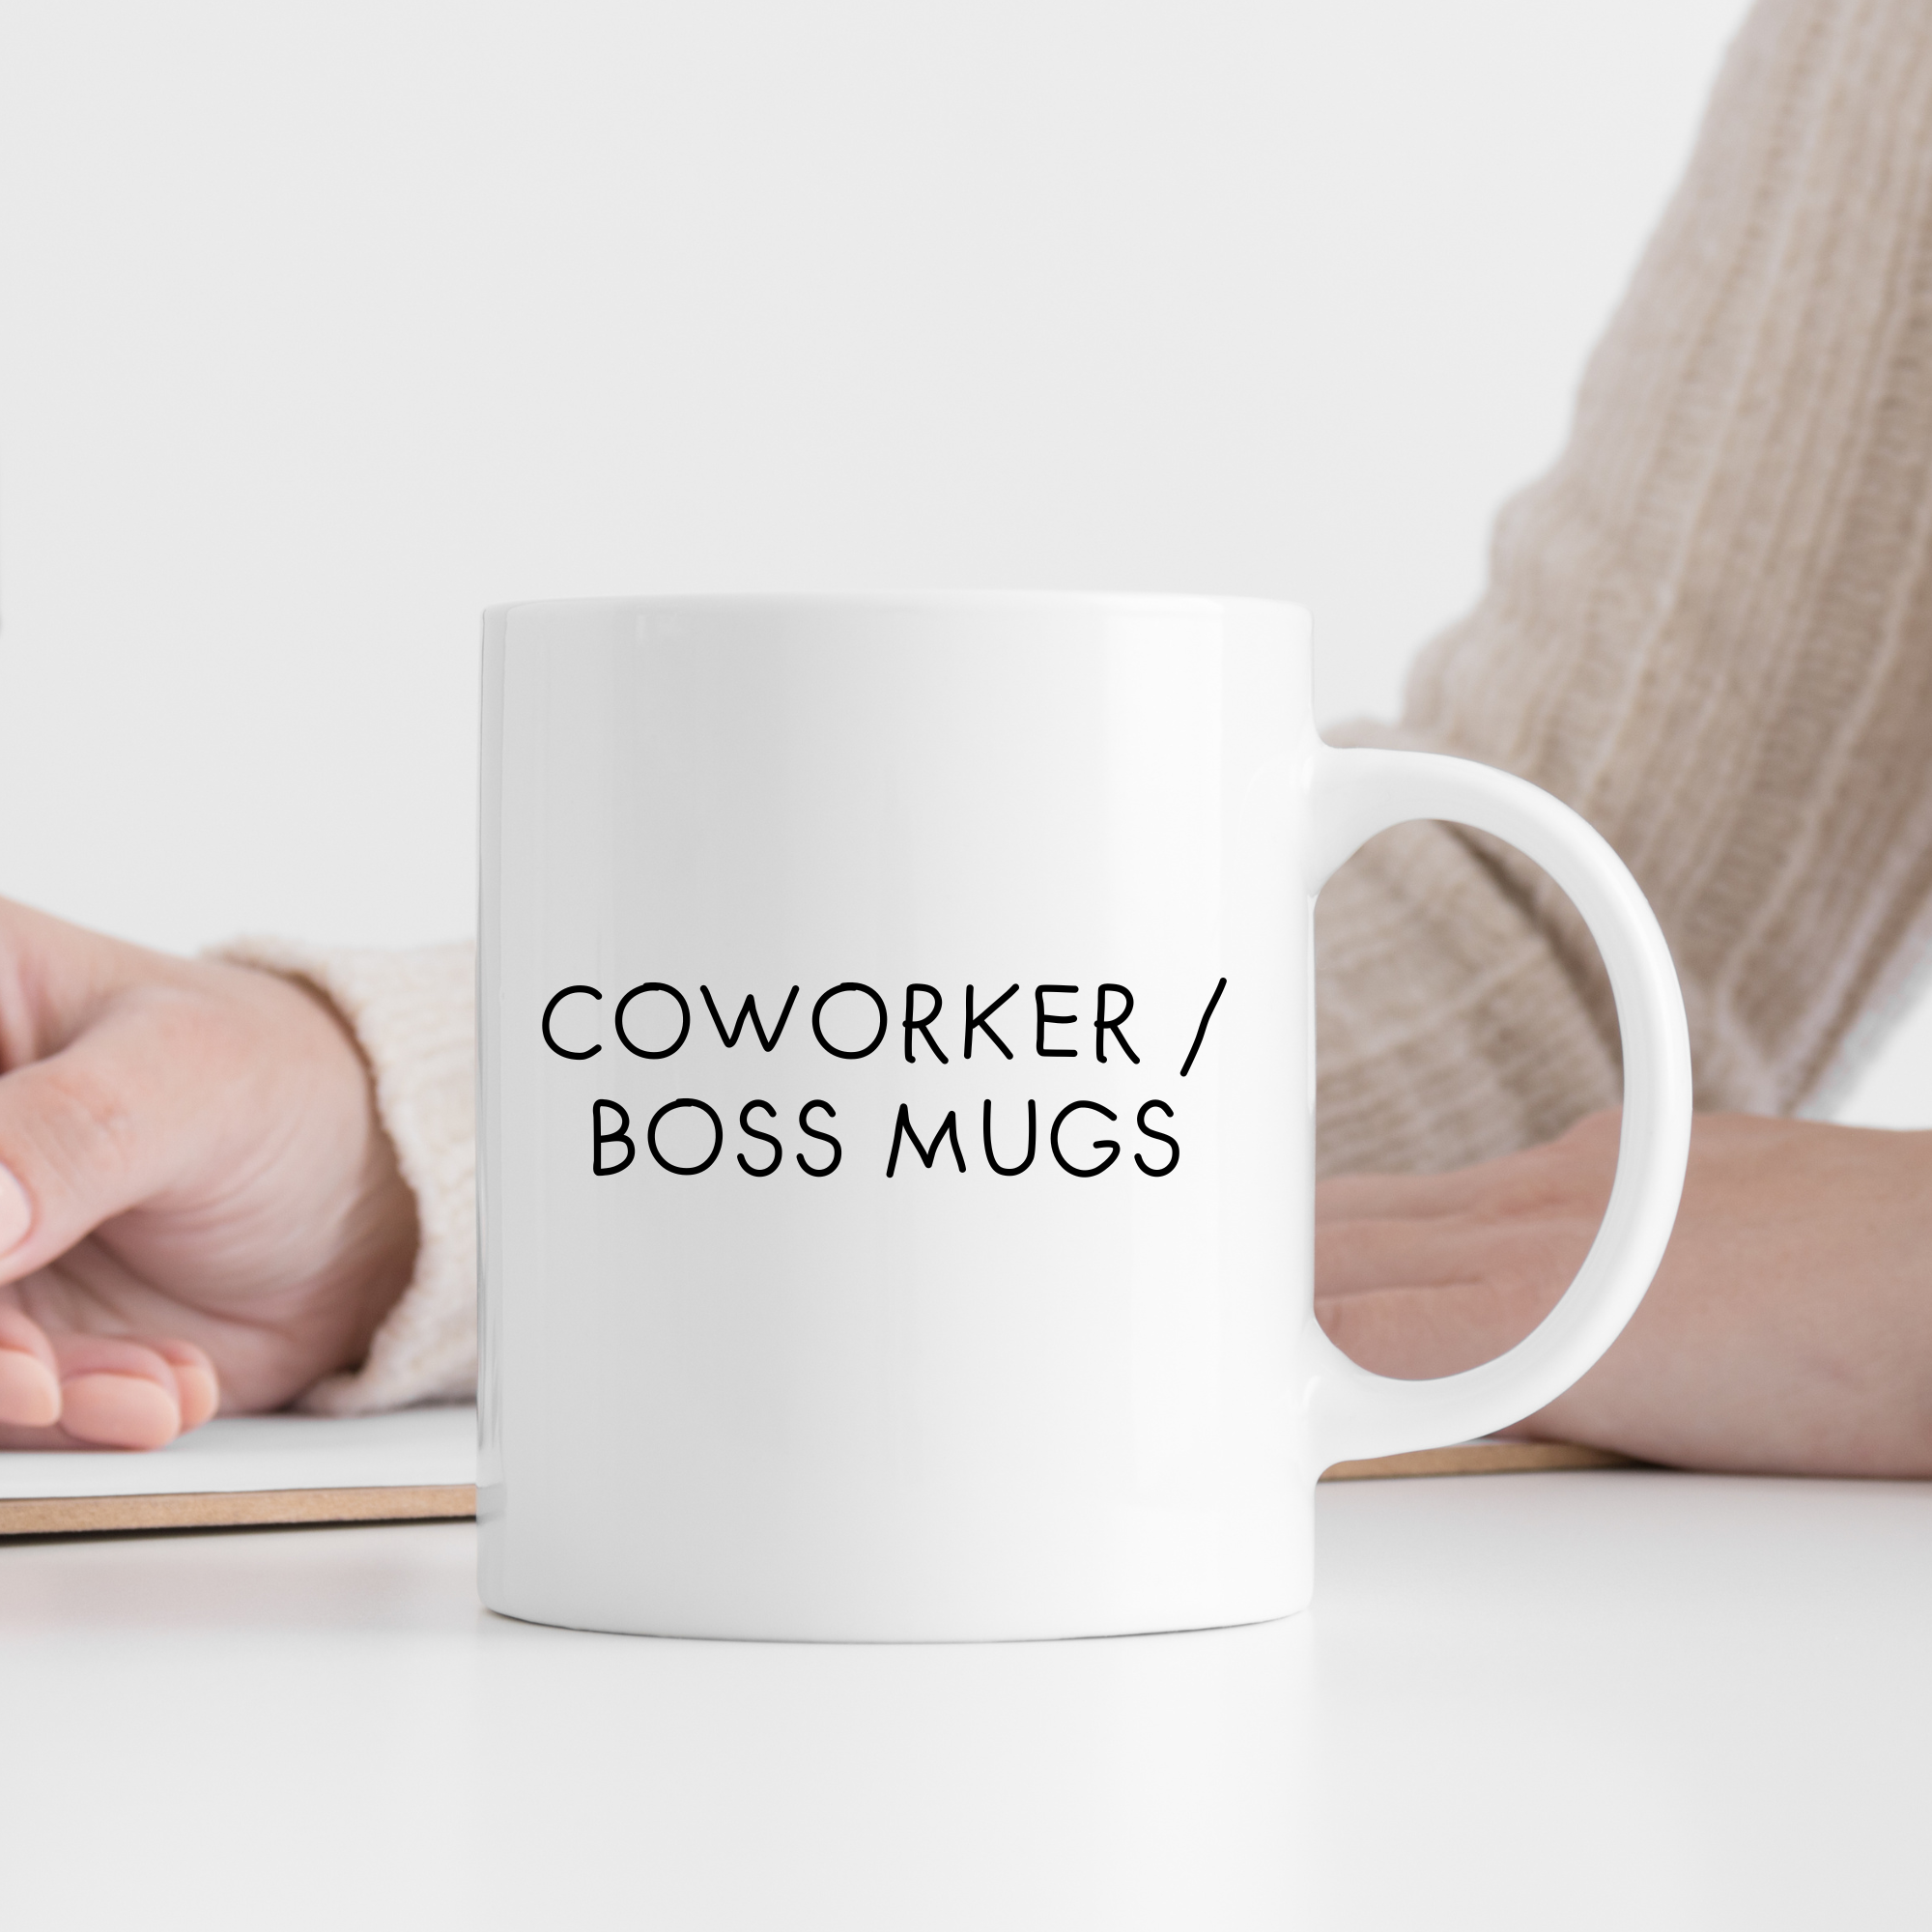 Coworker / Boss Mugs